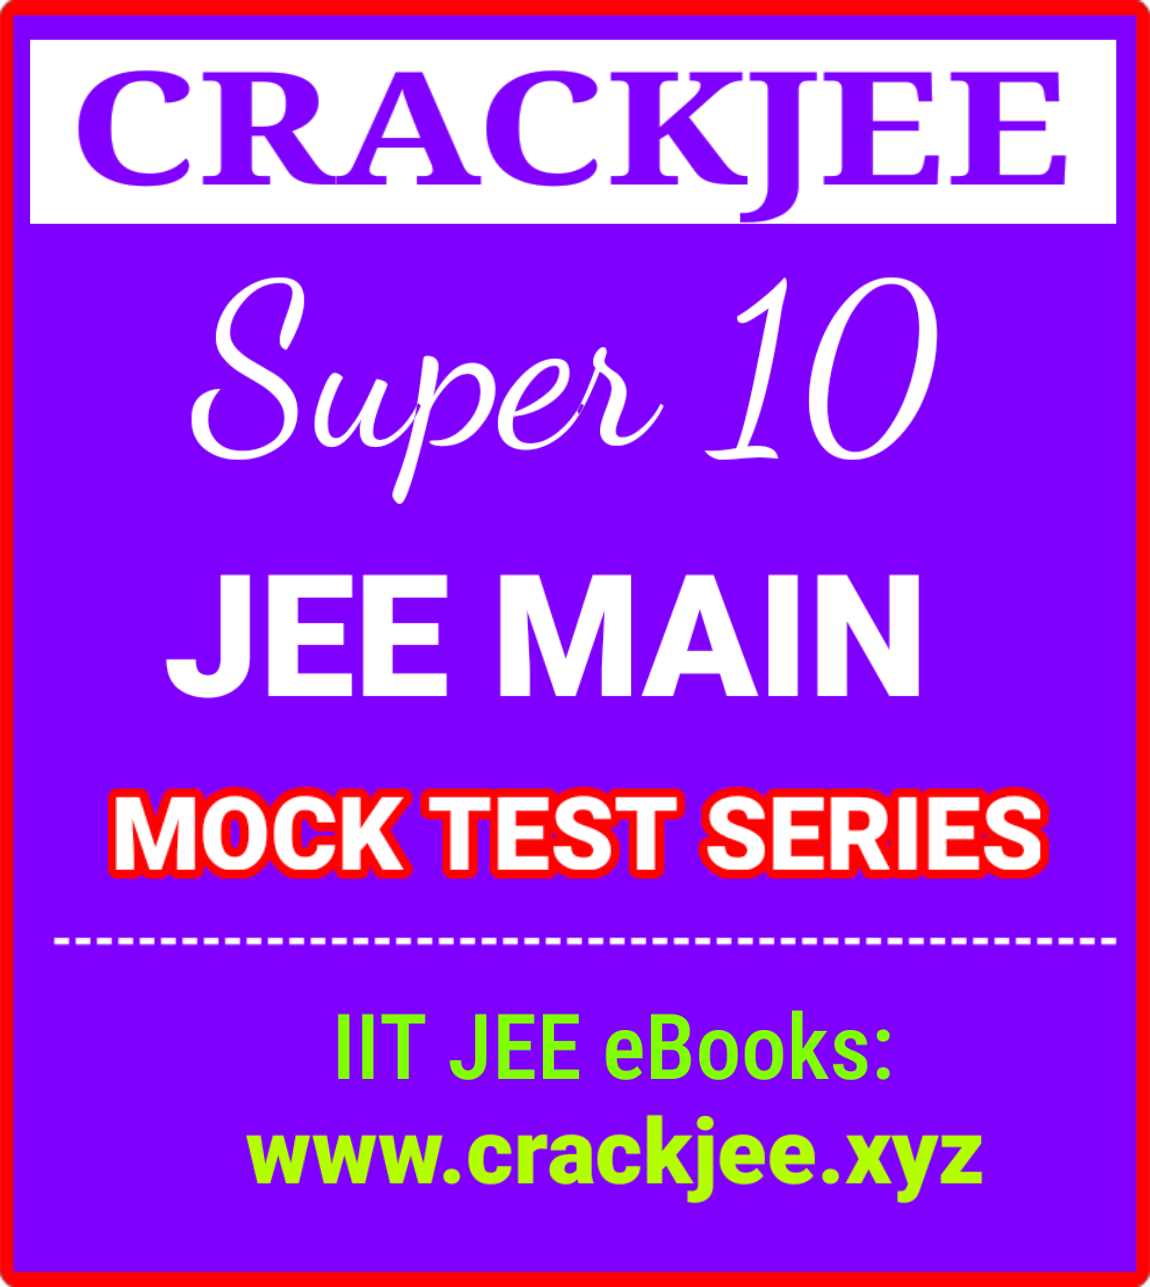 JEE Main And Advanced Mock Test Series 2020 CrackJee